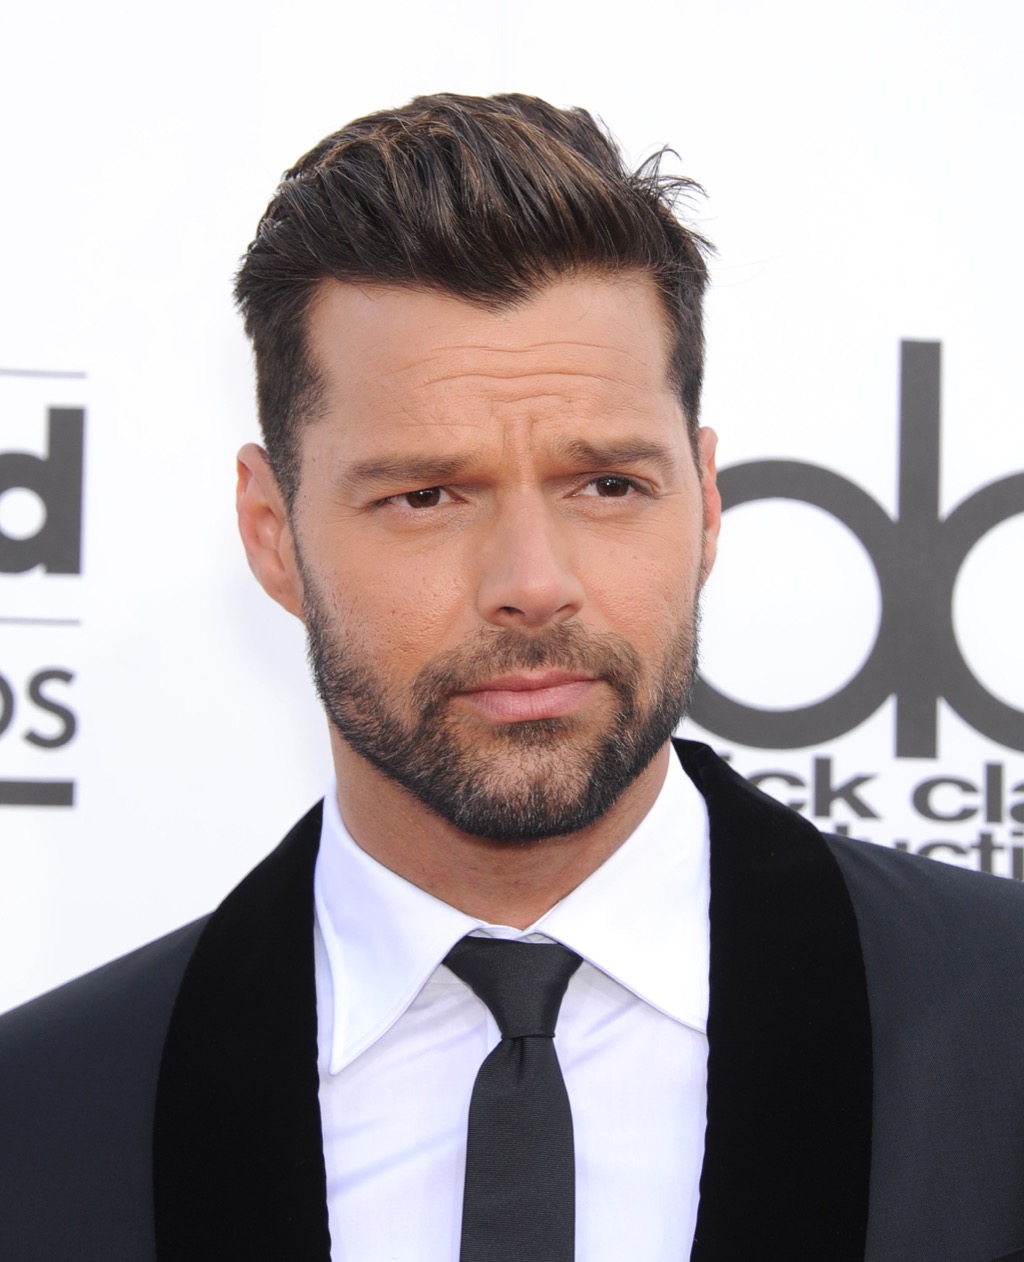 Ricky Martin at the Billboard Music Awards in 2014